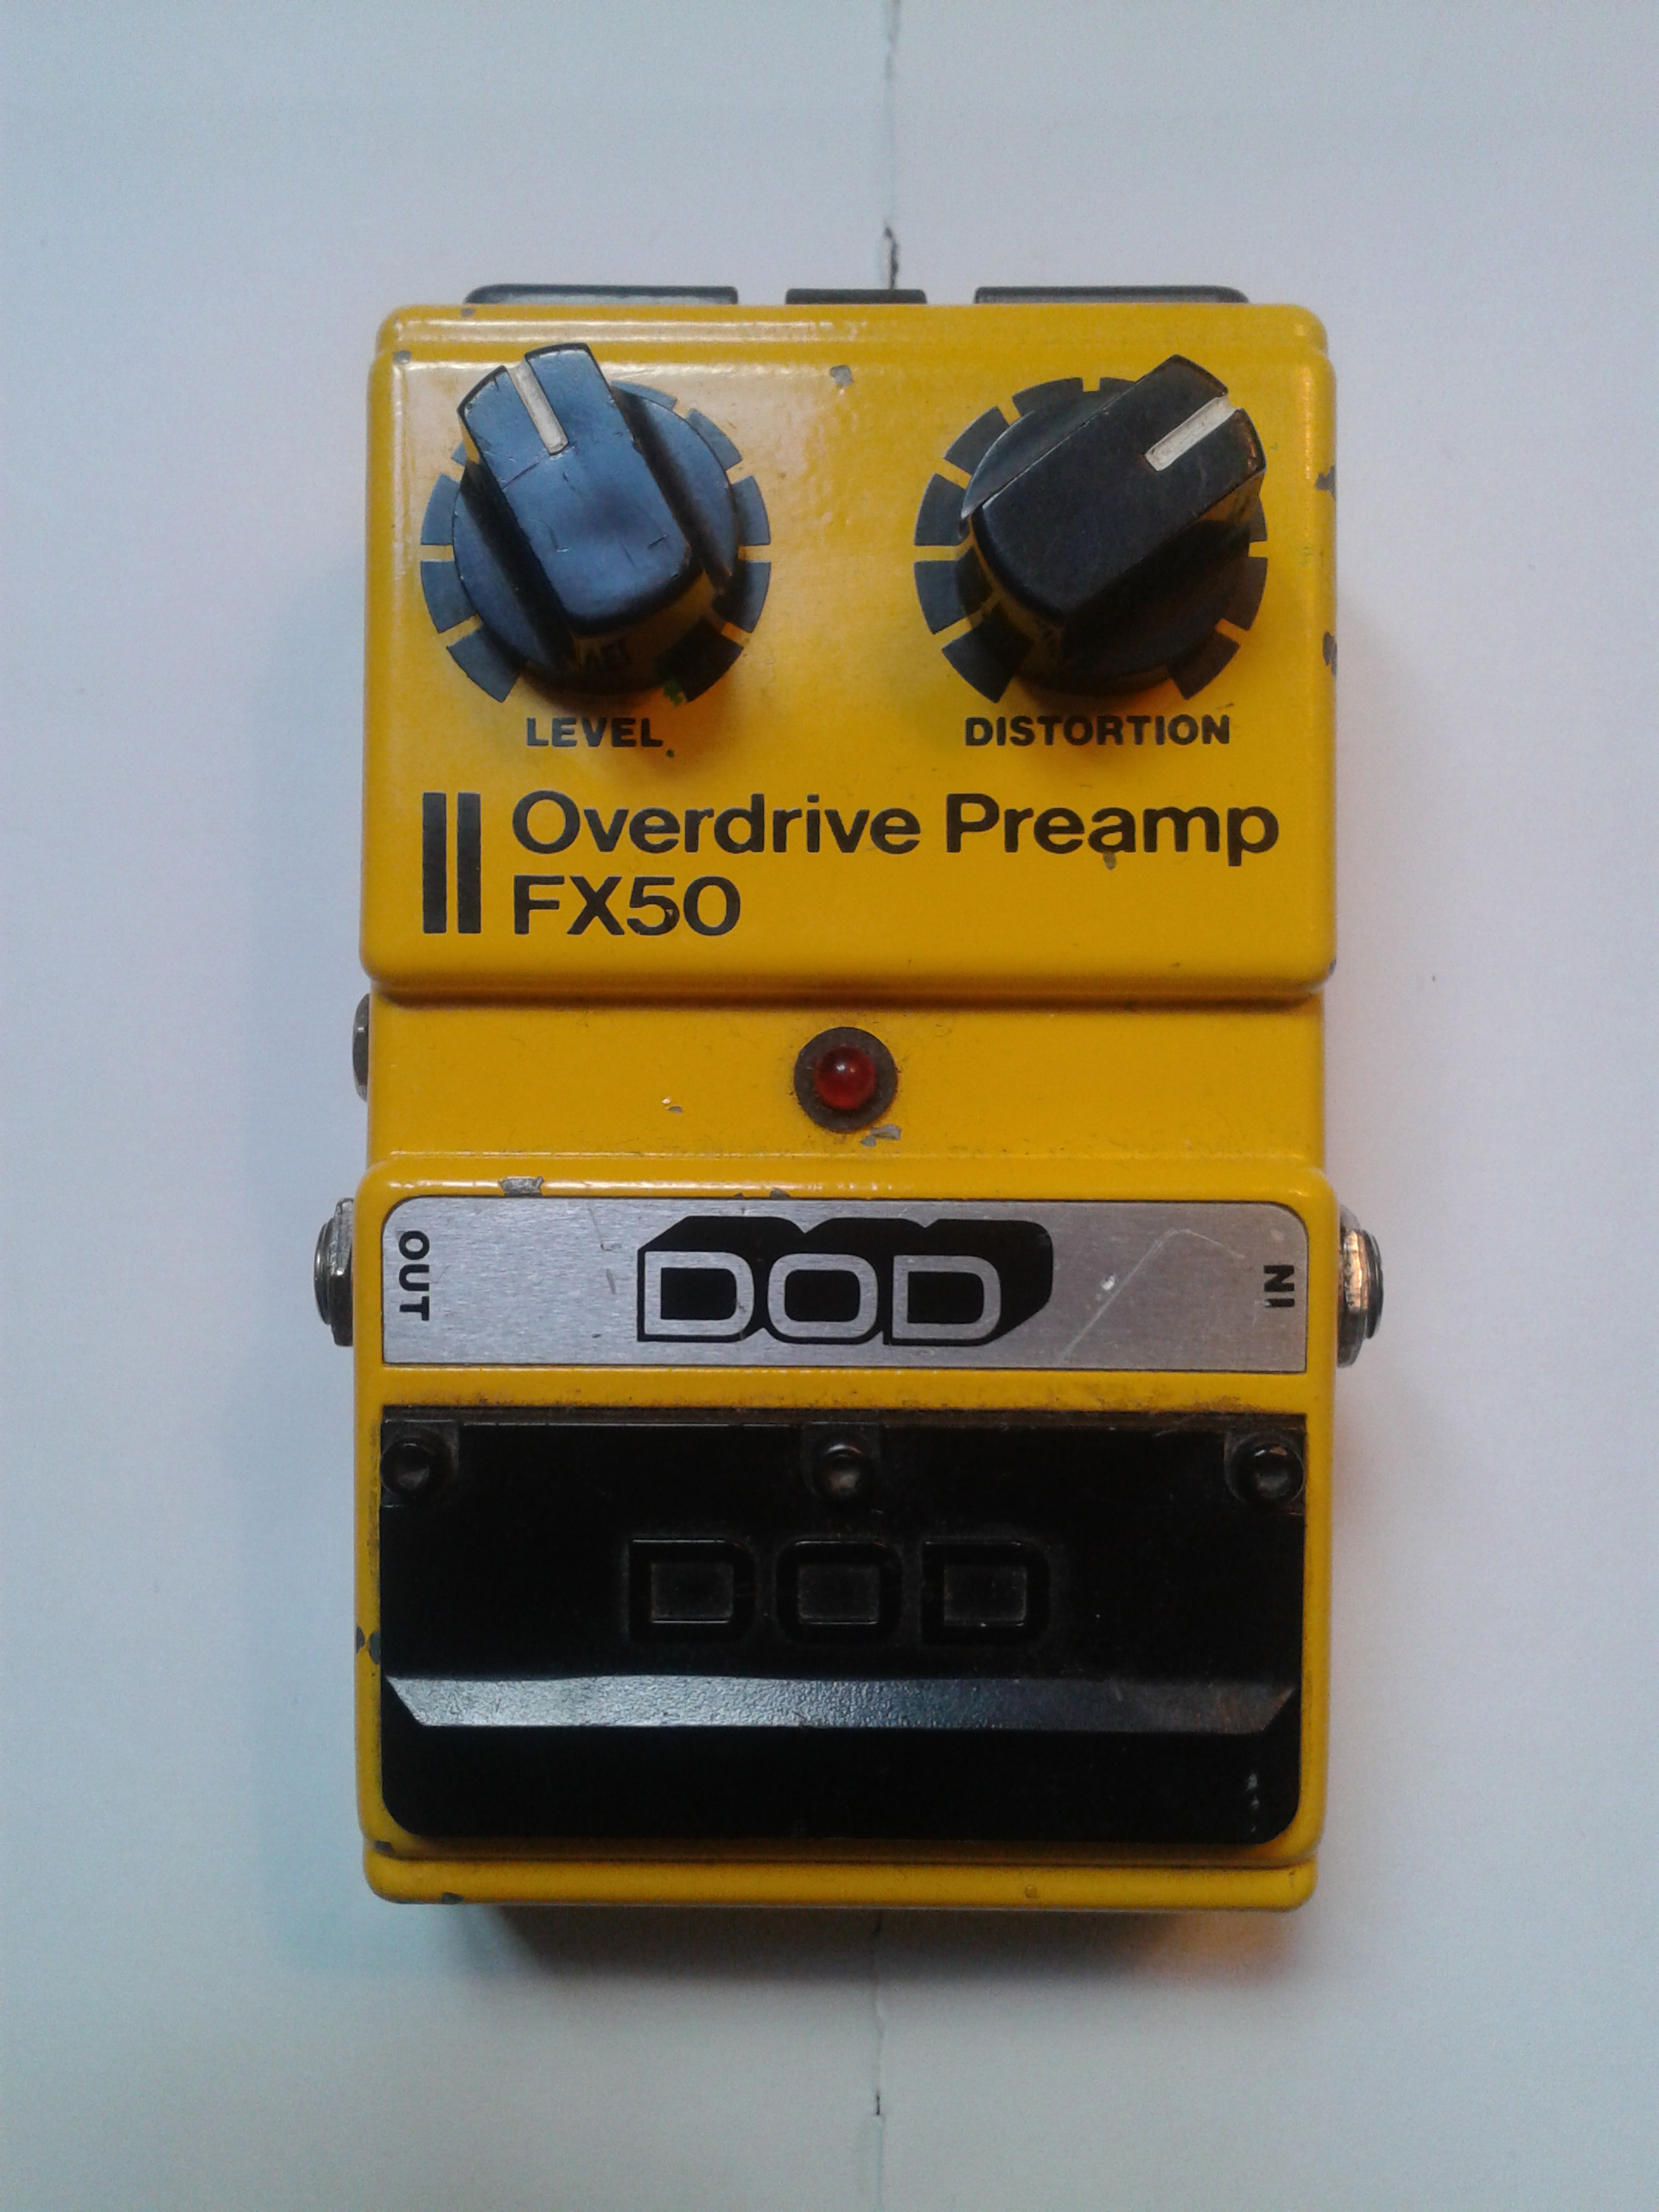 FX50 Overdrive Preamp - DOD FX50 Overdrive Preamp - Audiofanzine